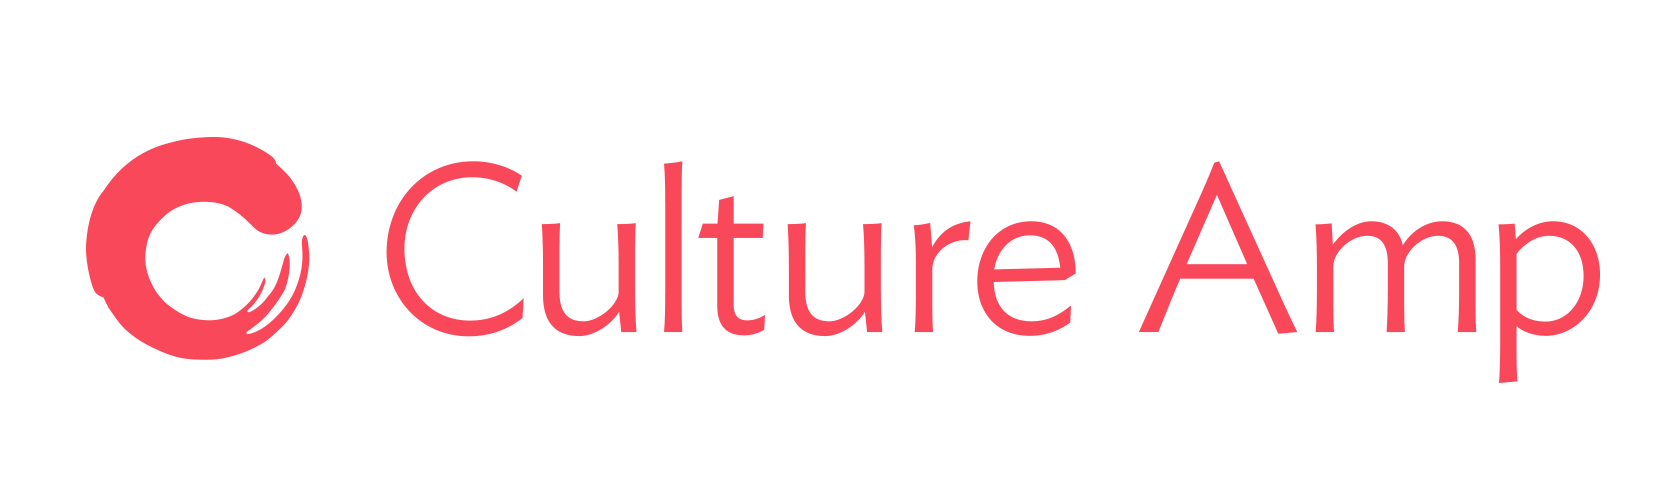 Employee pulse survey tool: Culture Amp logo